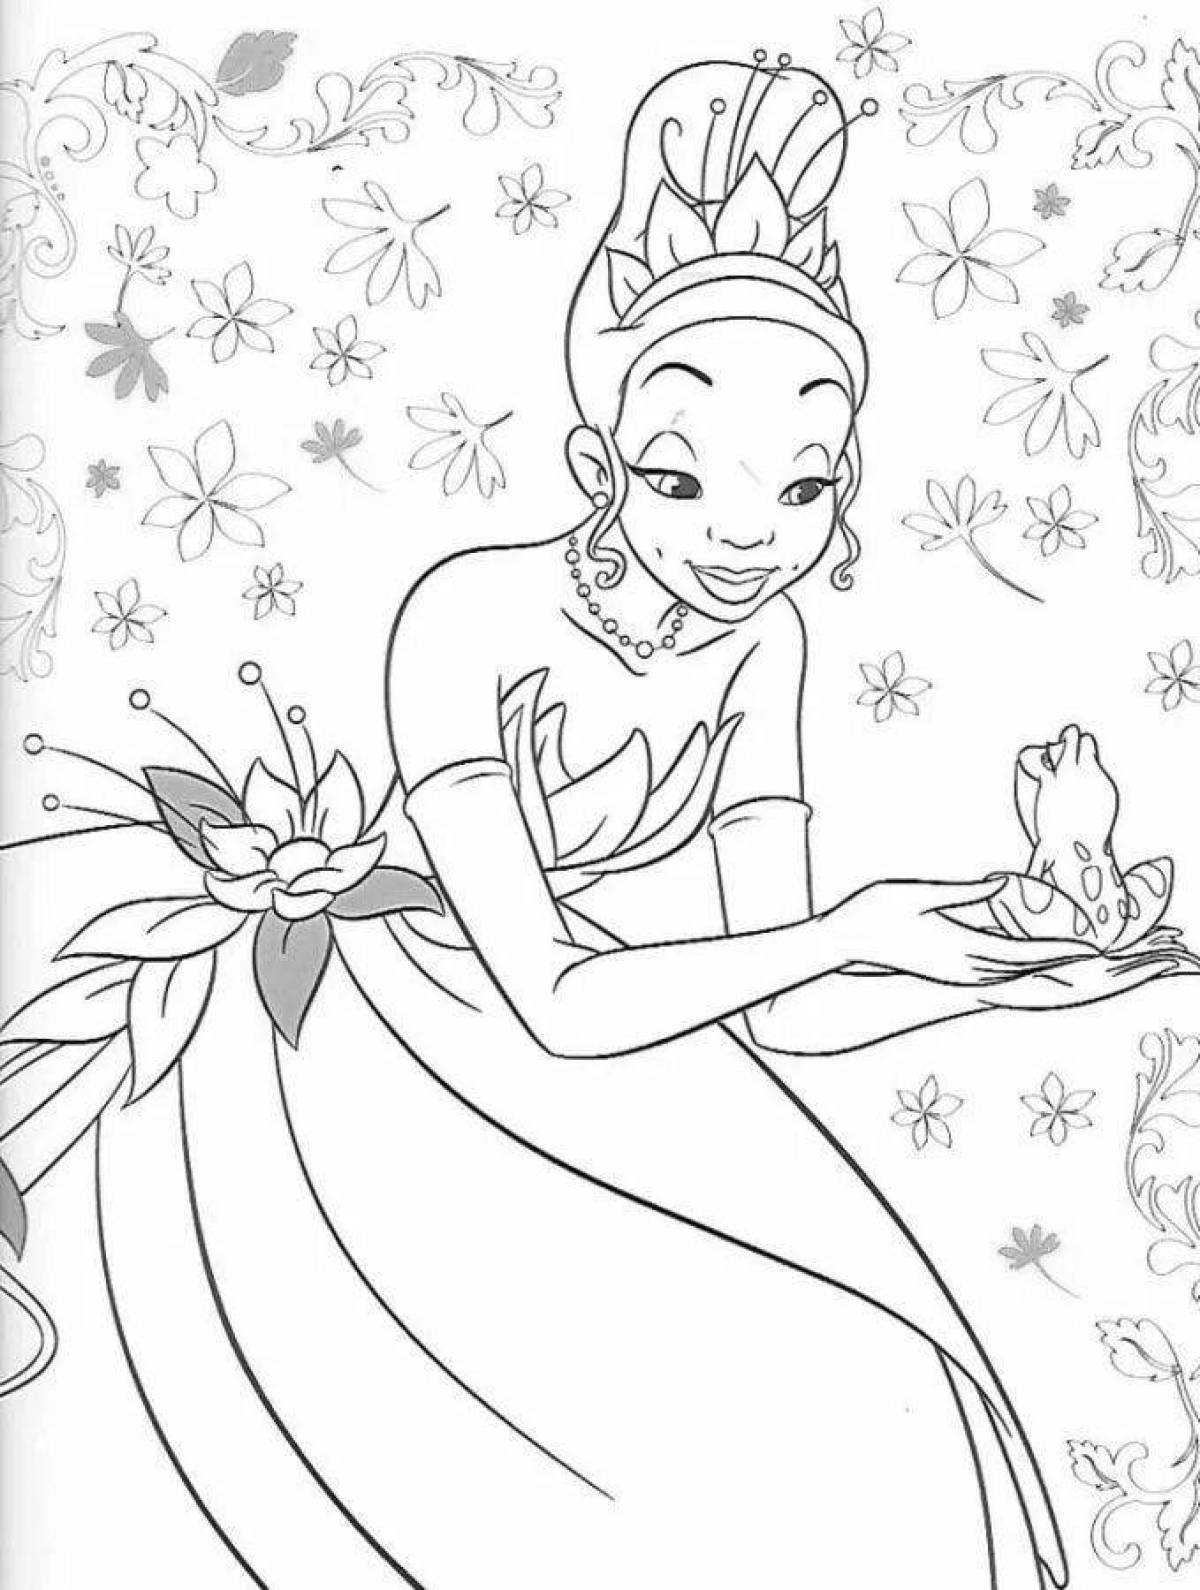 Coloring page joyful frog princess